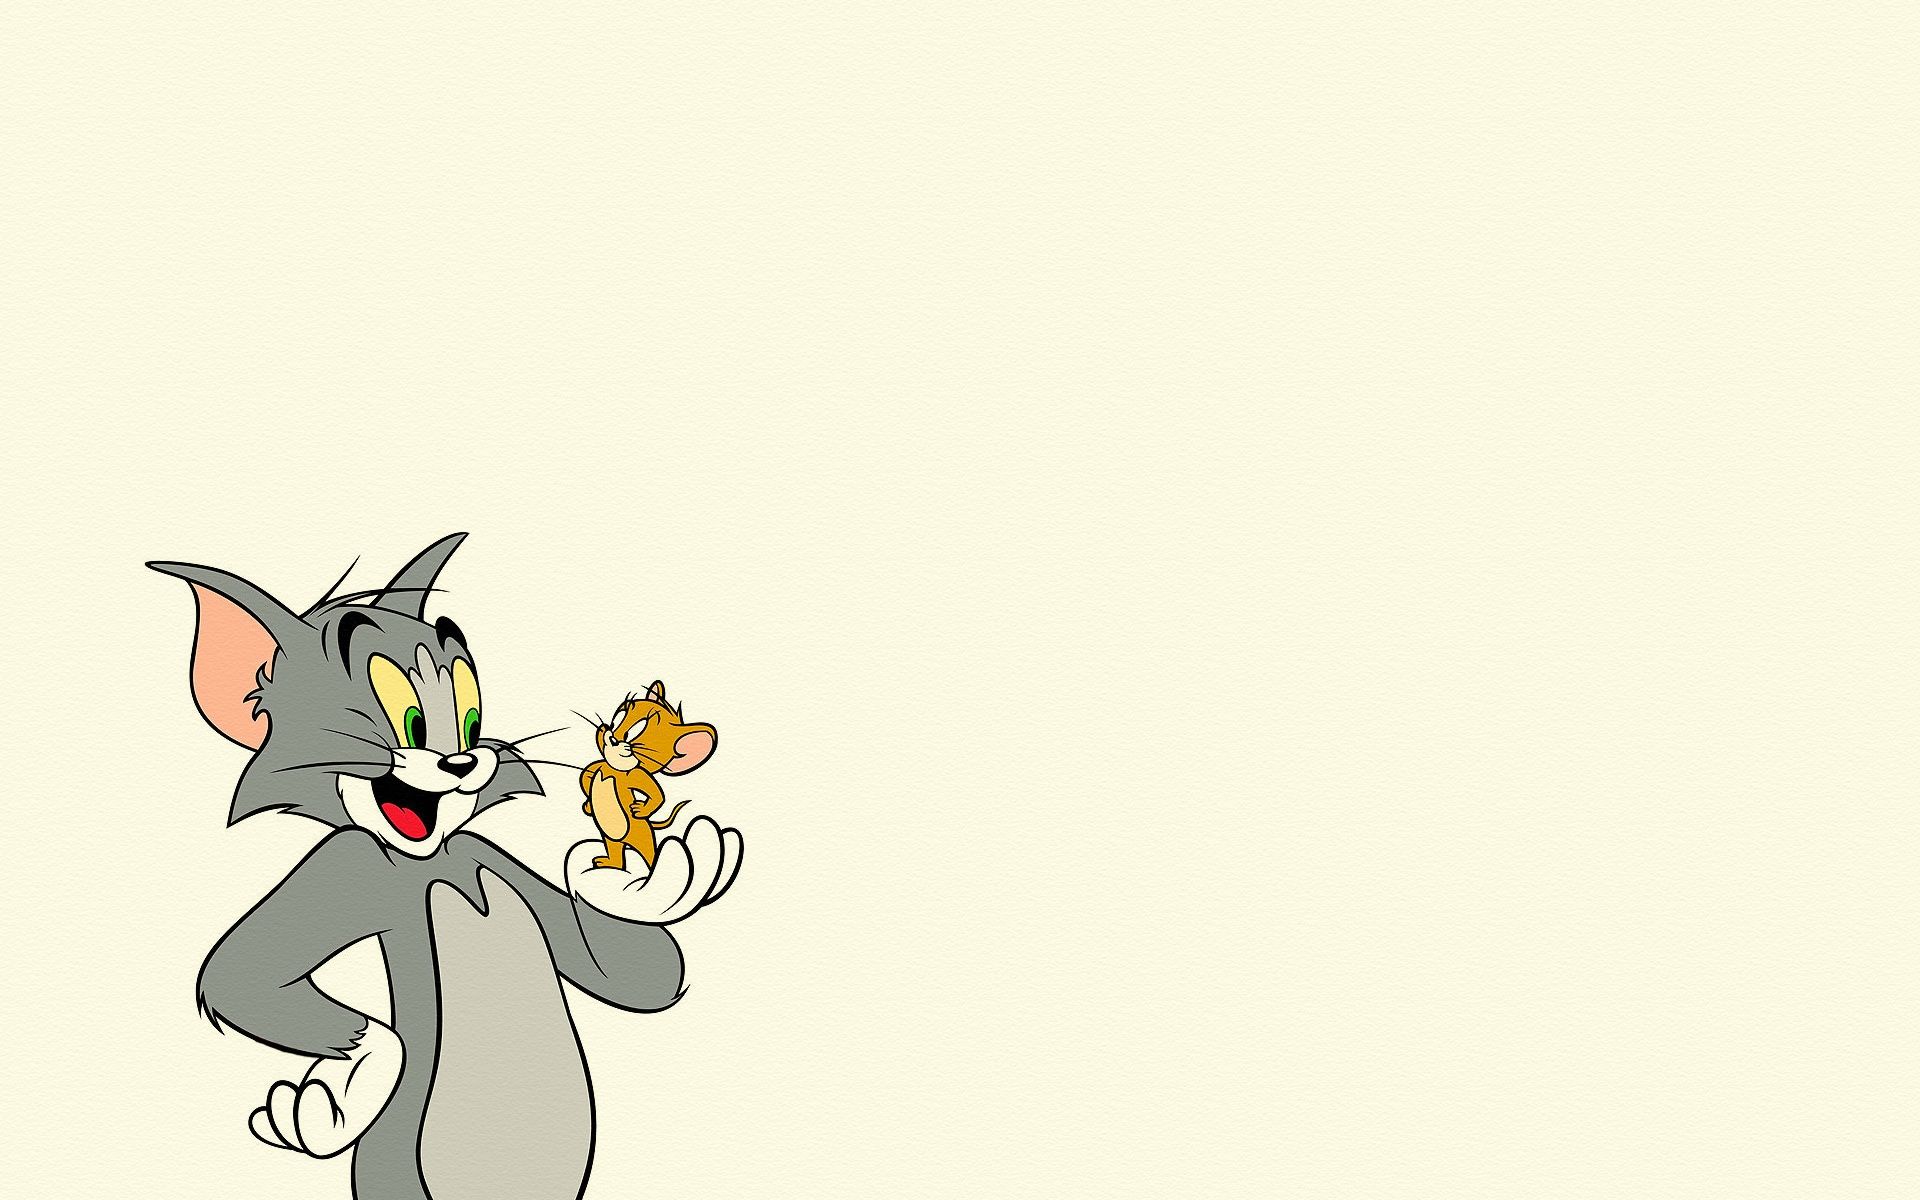 Tom and Jerry Cartoon Wallpaper .hipwallpaper.com